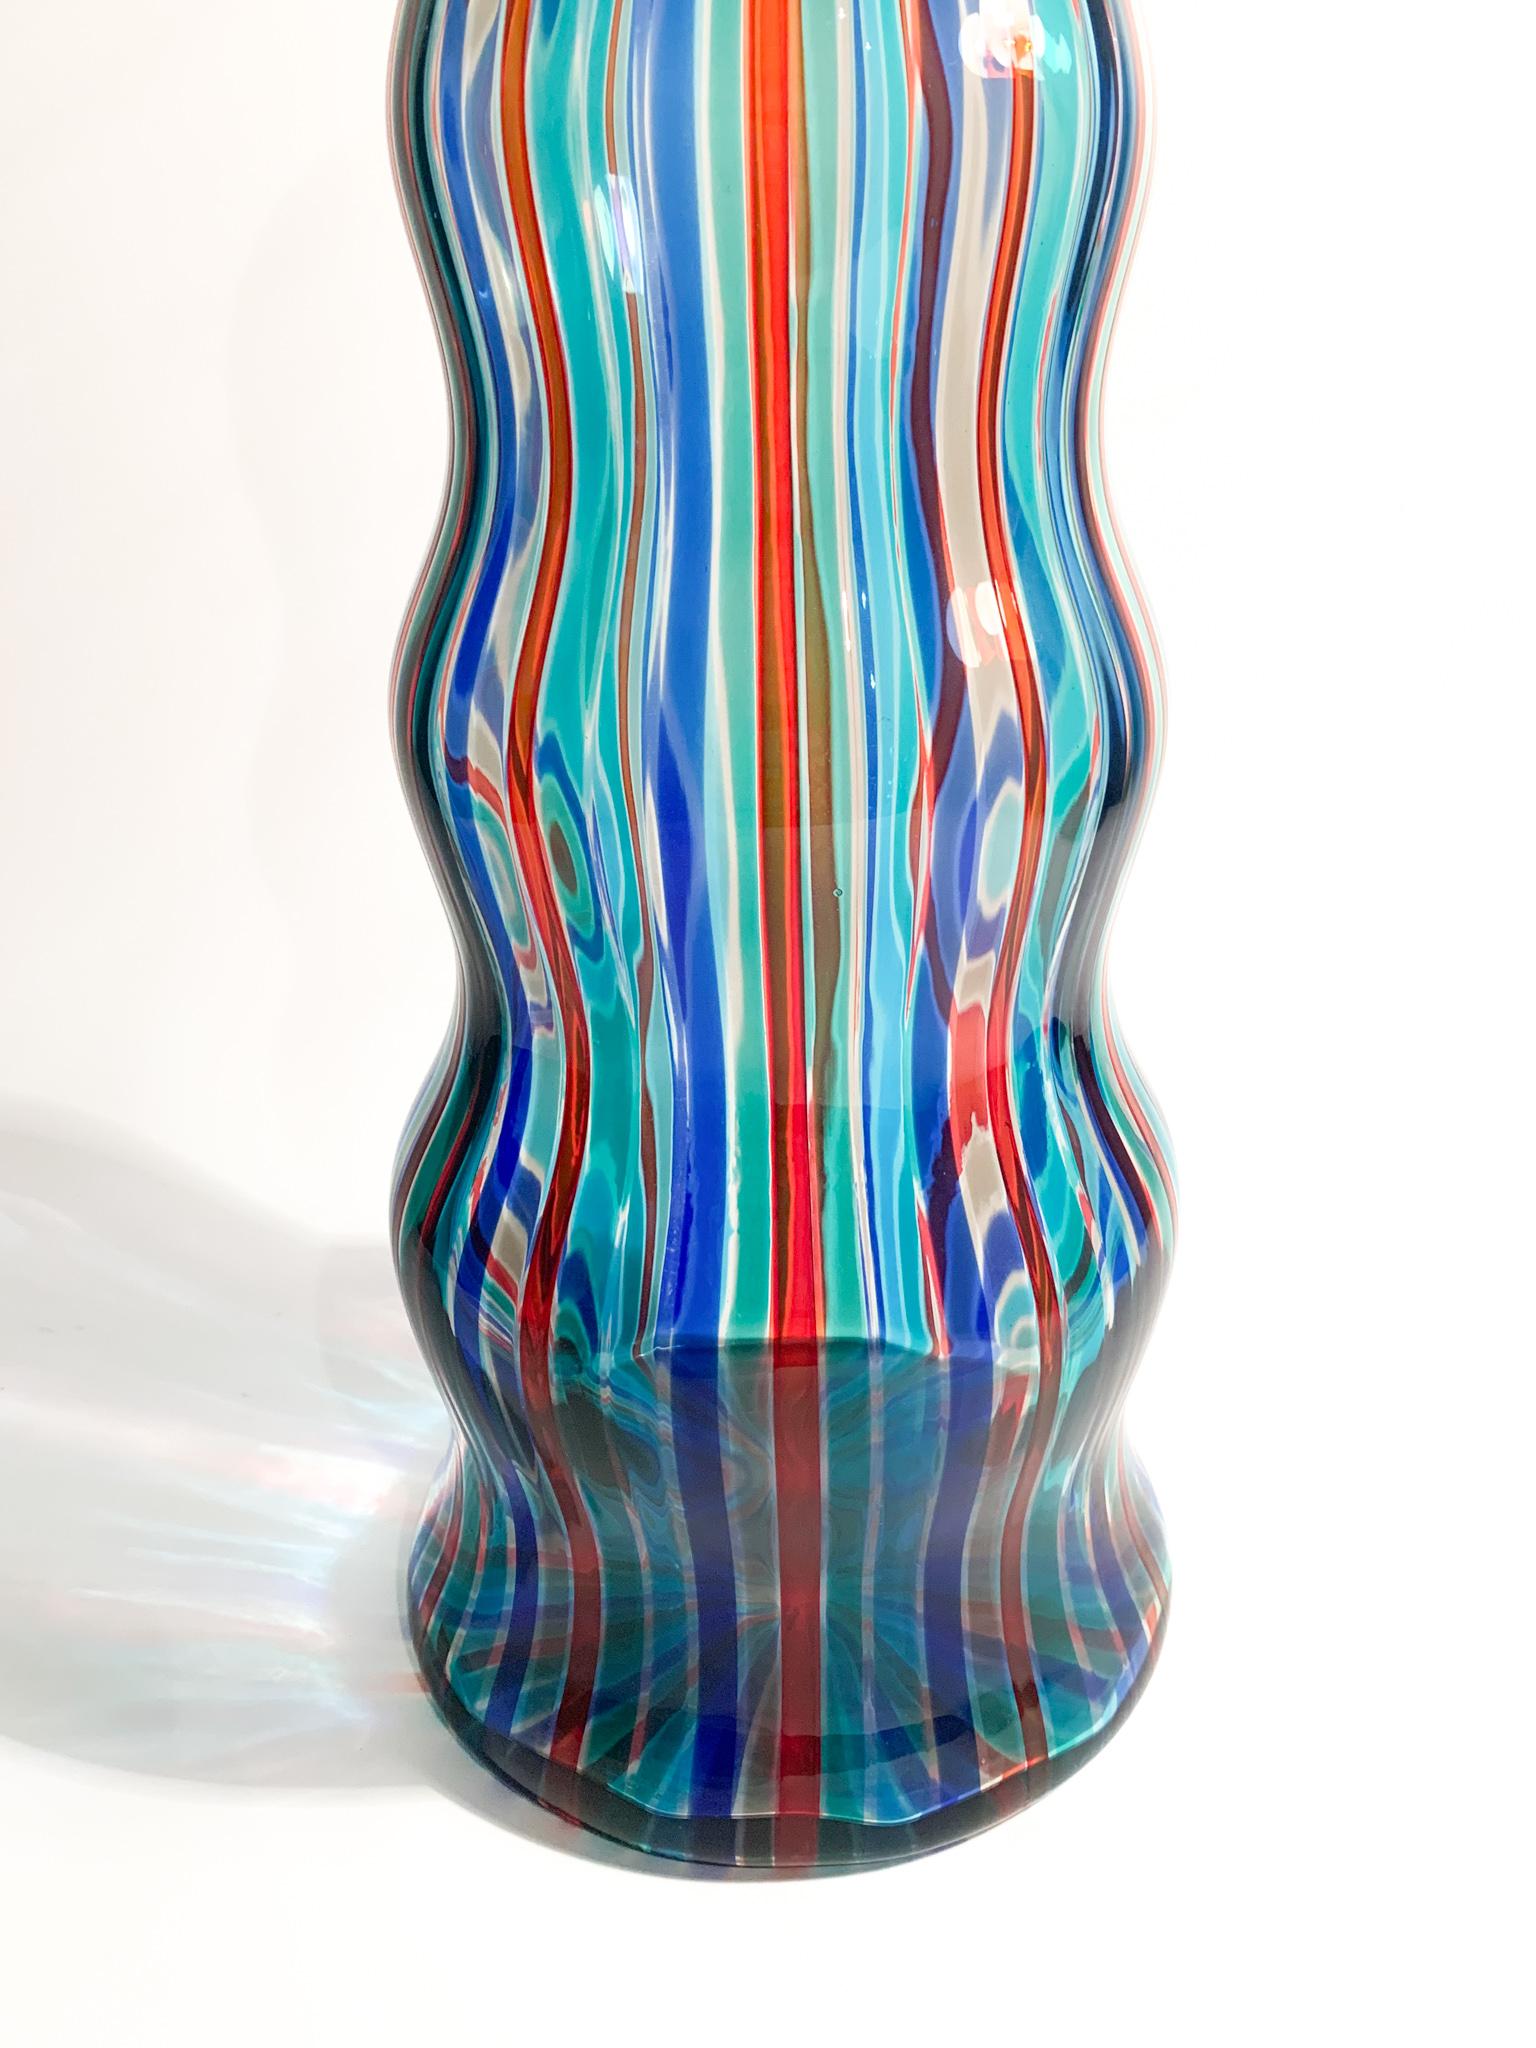 Italian 'Arado' Vase by Alessandro Mendini for Venini from 1988 For Sale